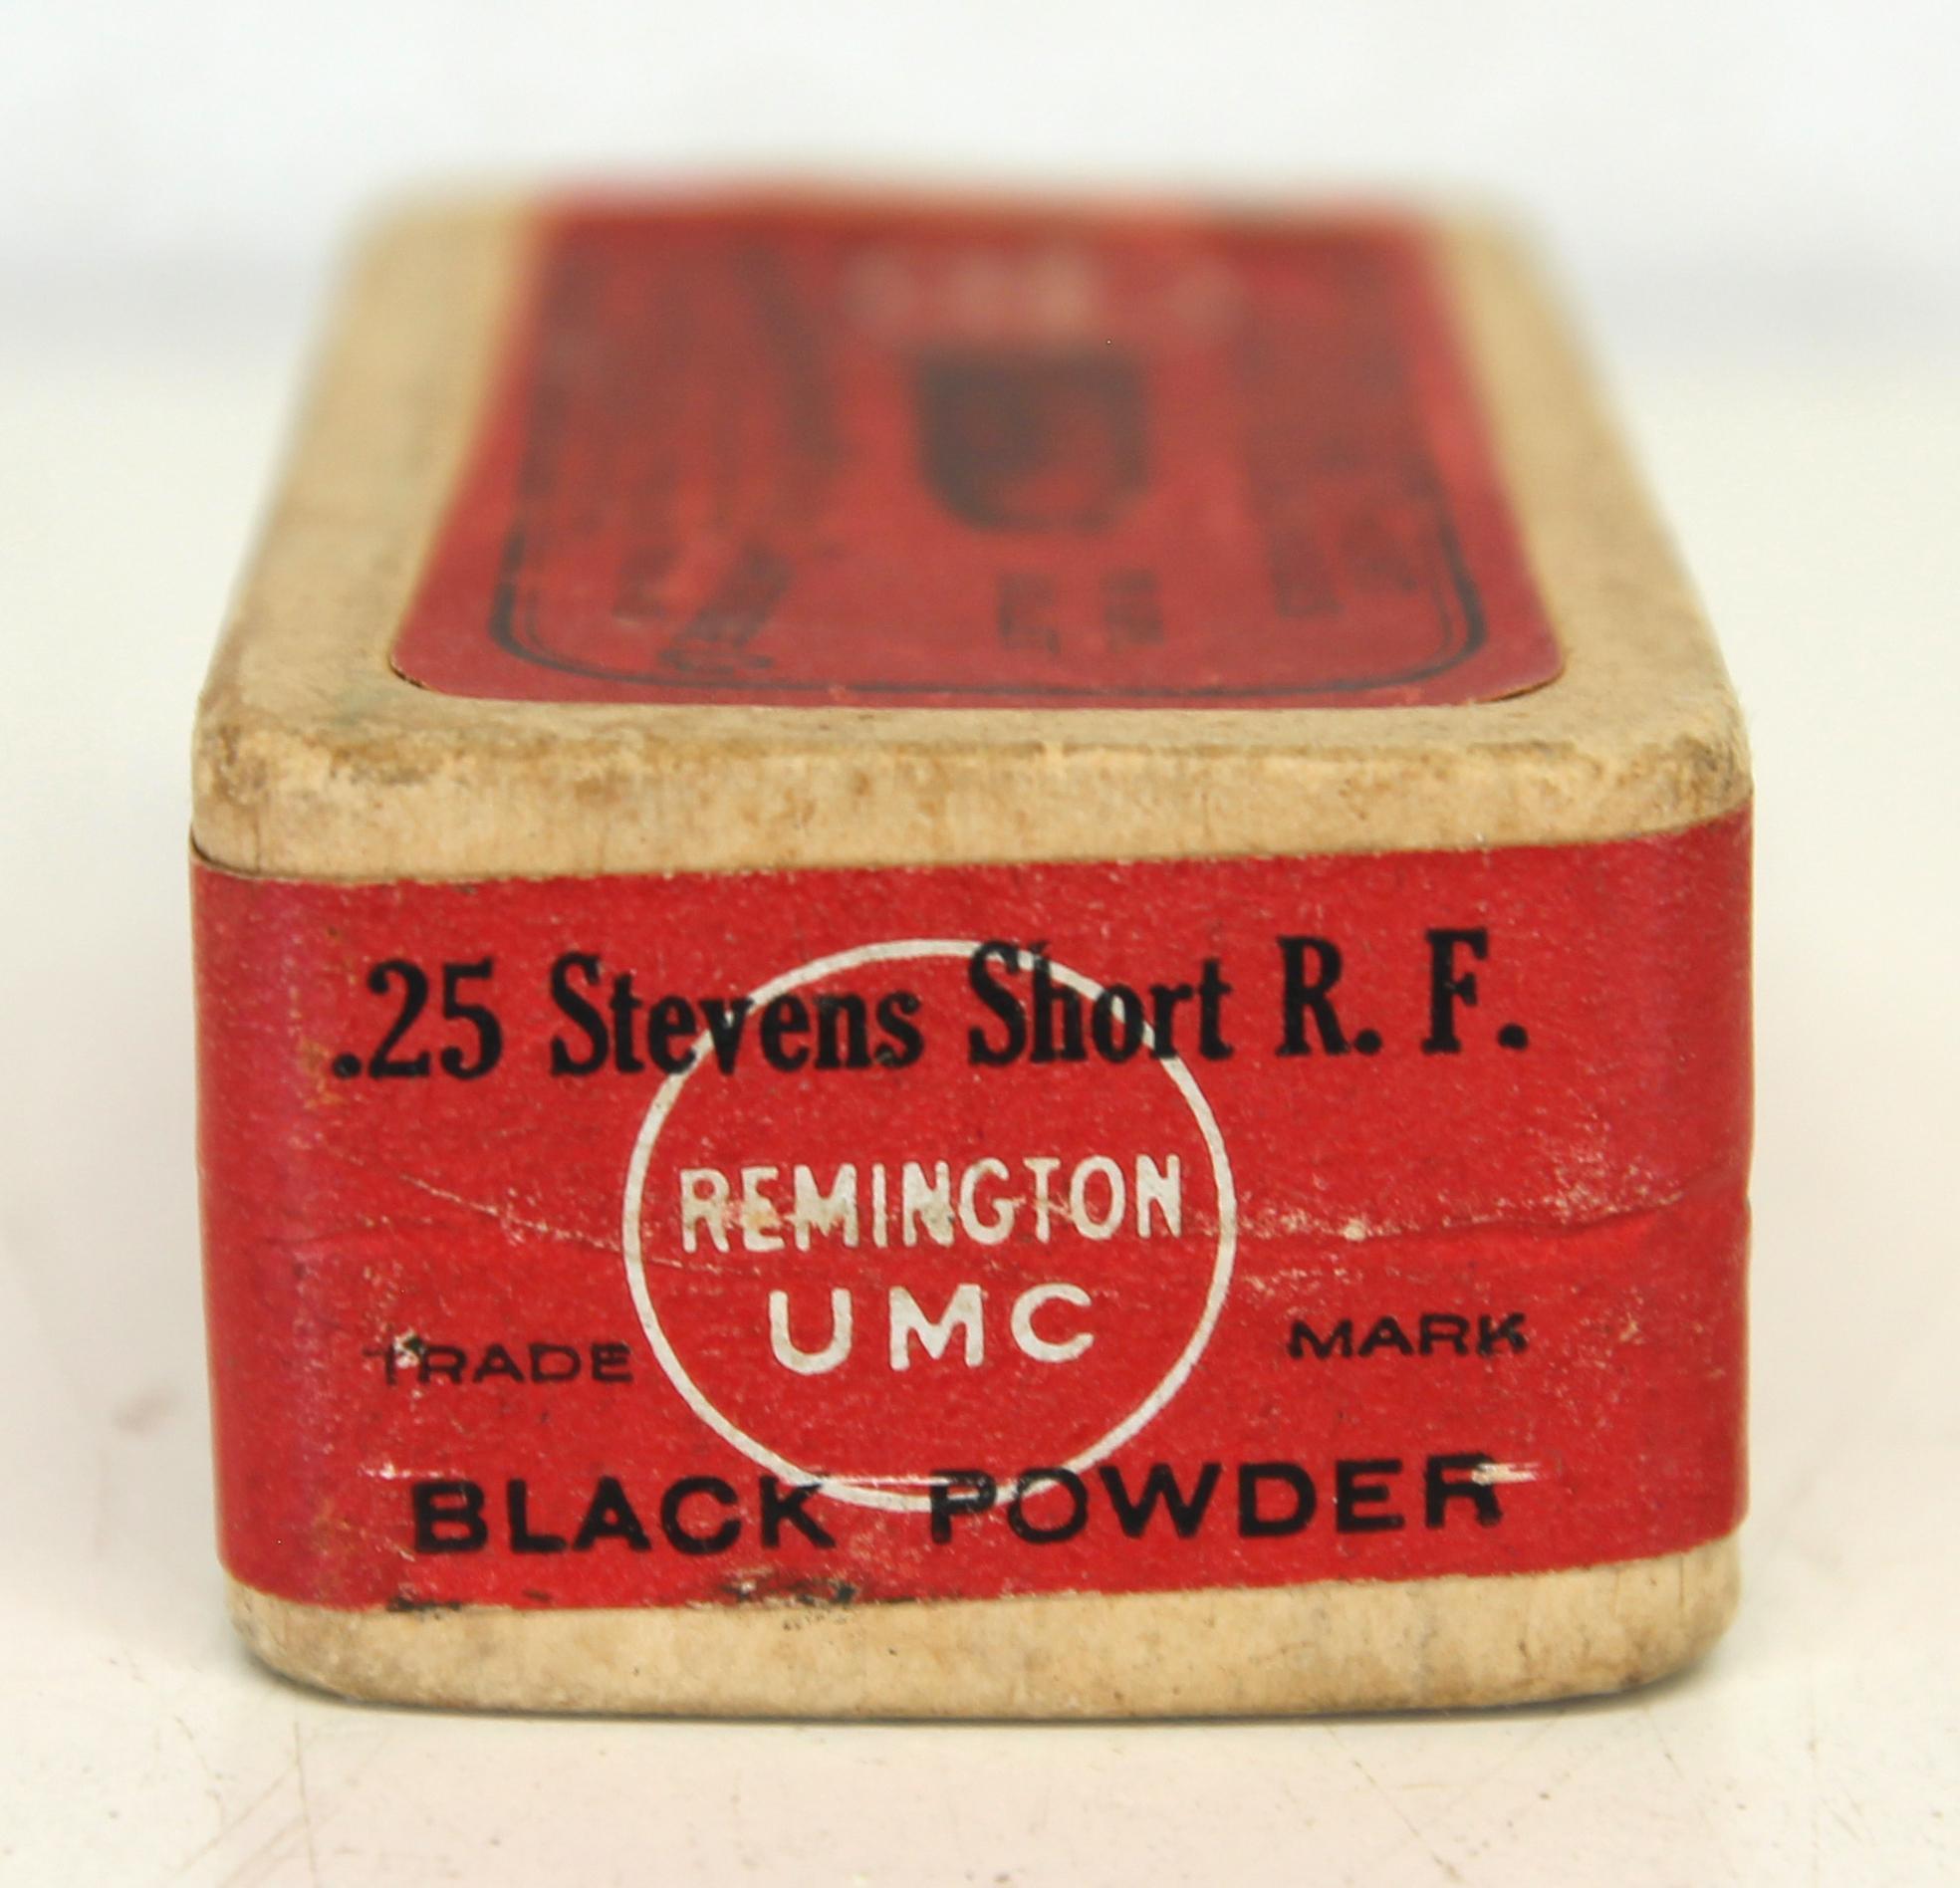 Full Vintage Sealed Two Piece Box Remington UMC .25 Stevens Short Rimfire Cartridges Ammunition...